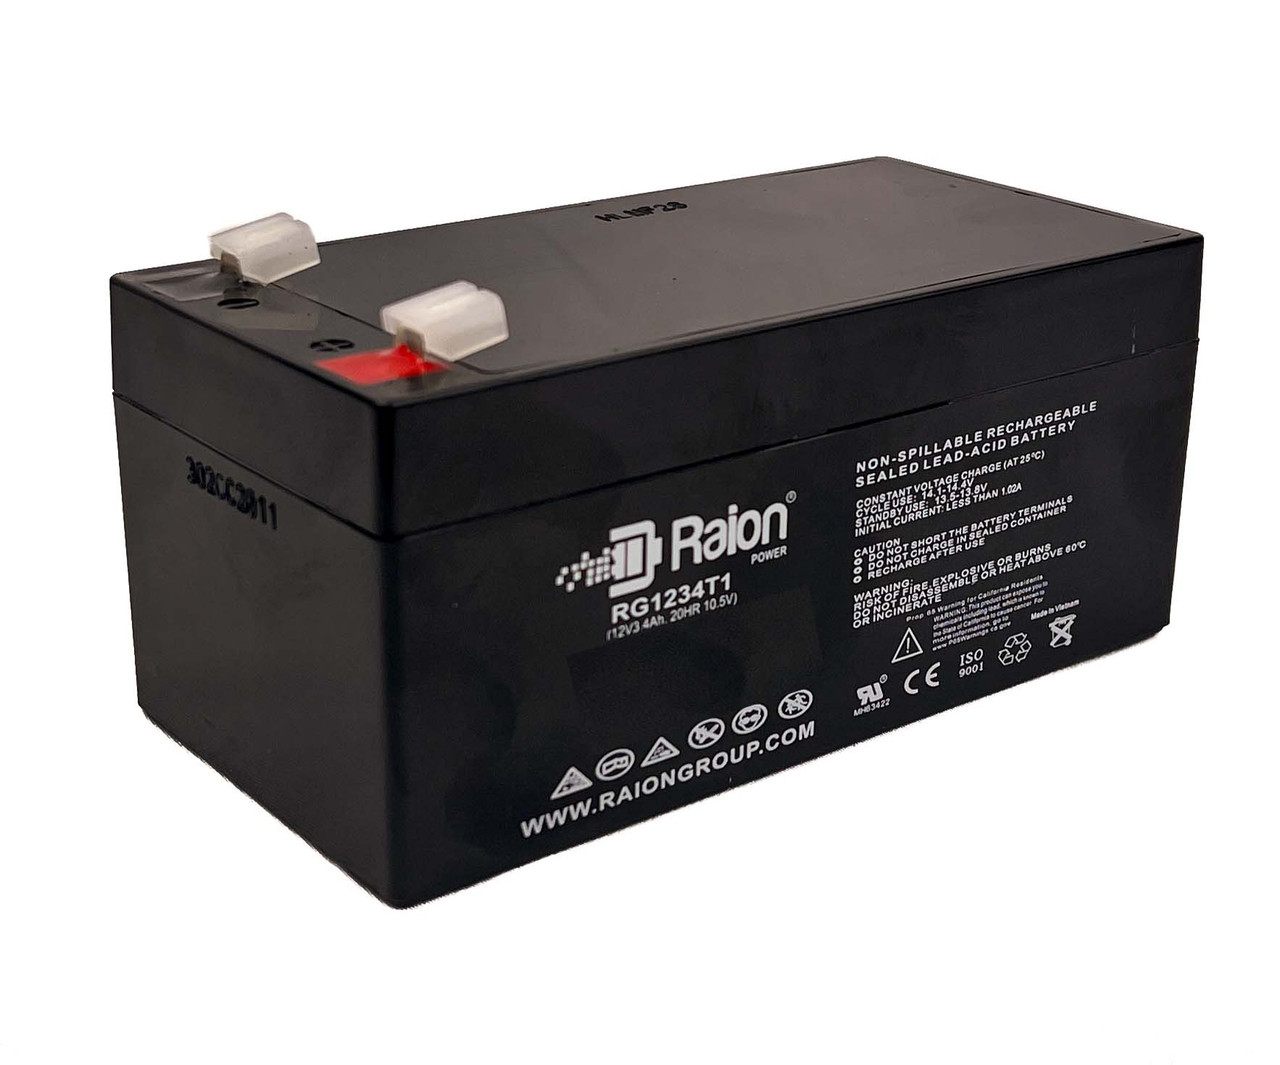 Raion Power 12V 3.4Ah Non-Spillable Replacement Battery for Magnavolt SLA12-3